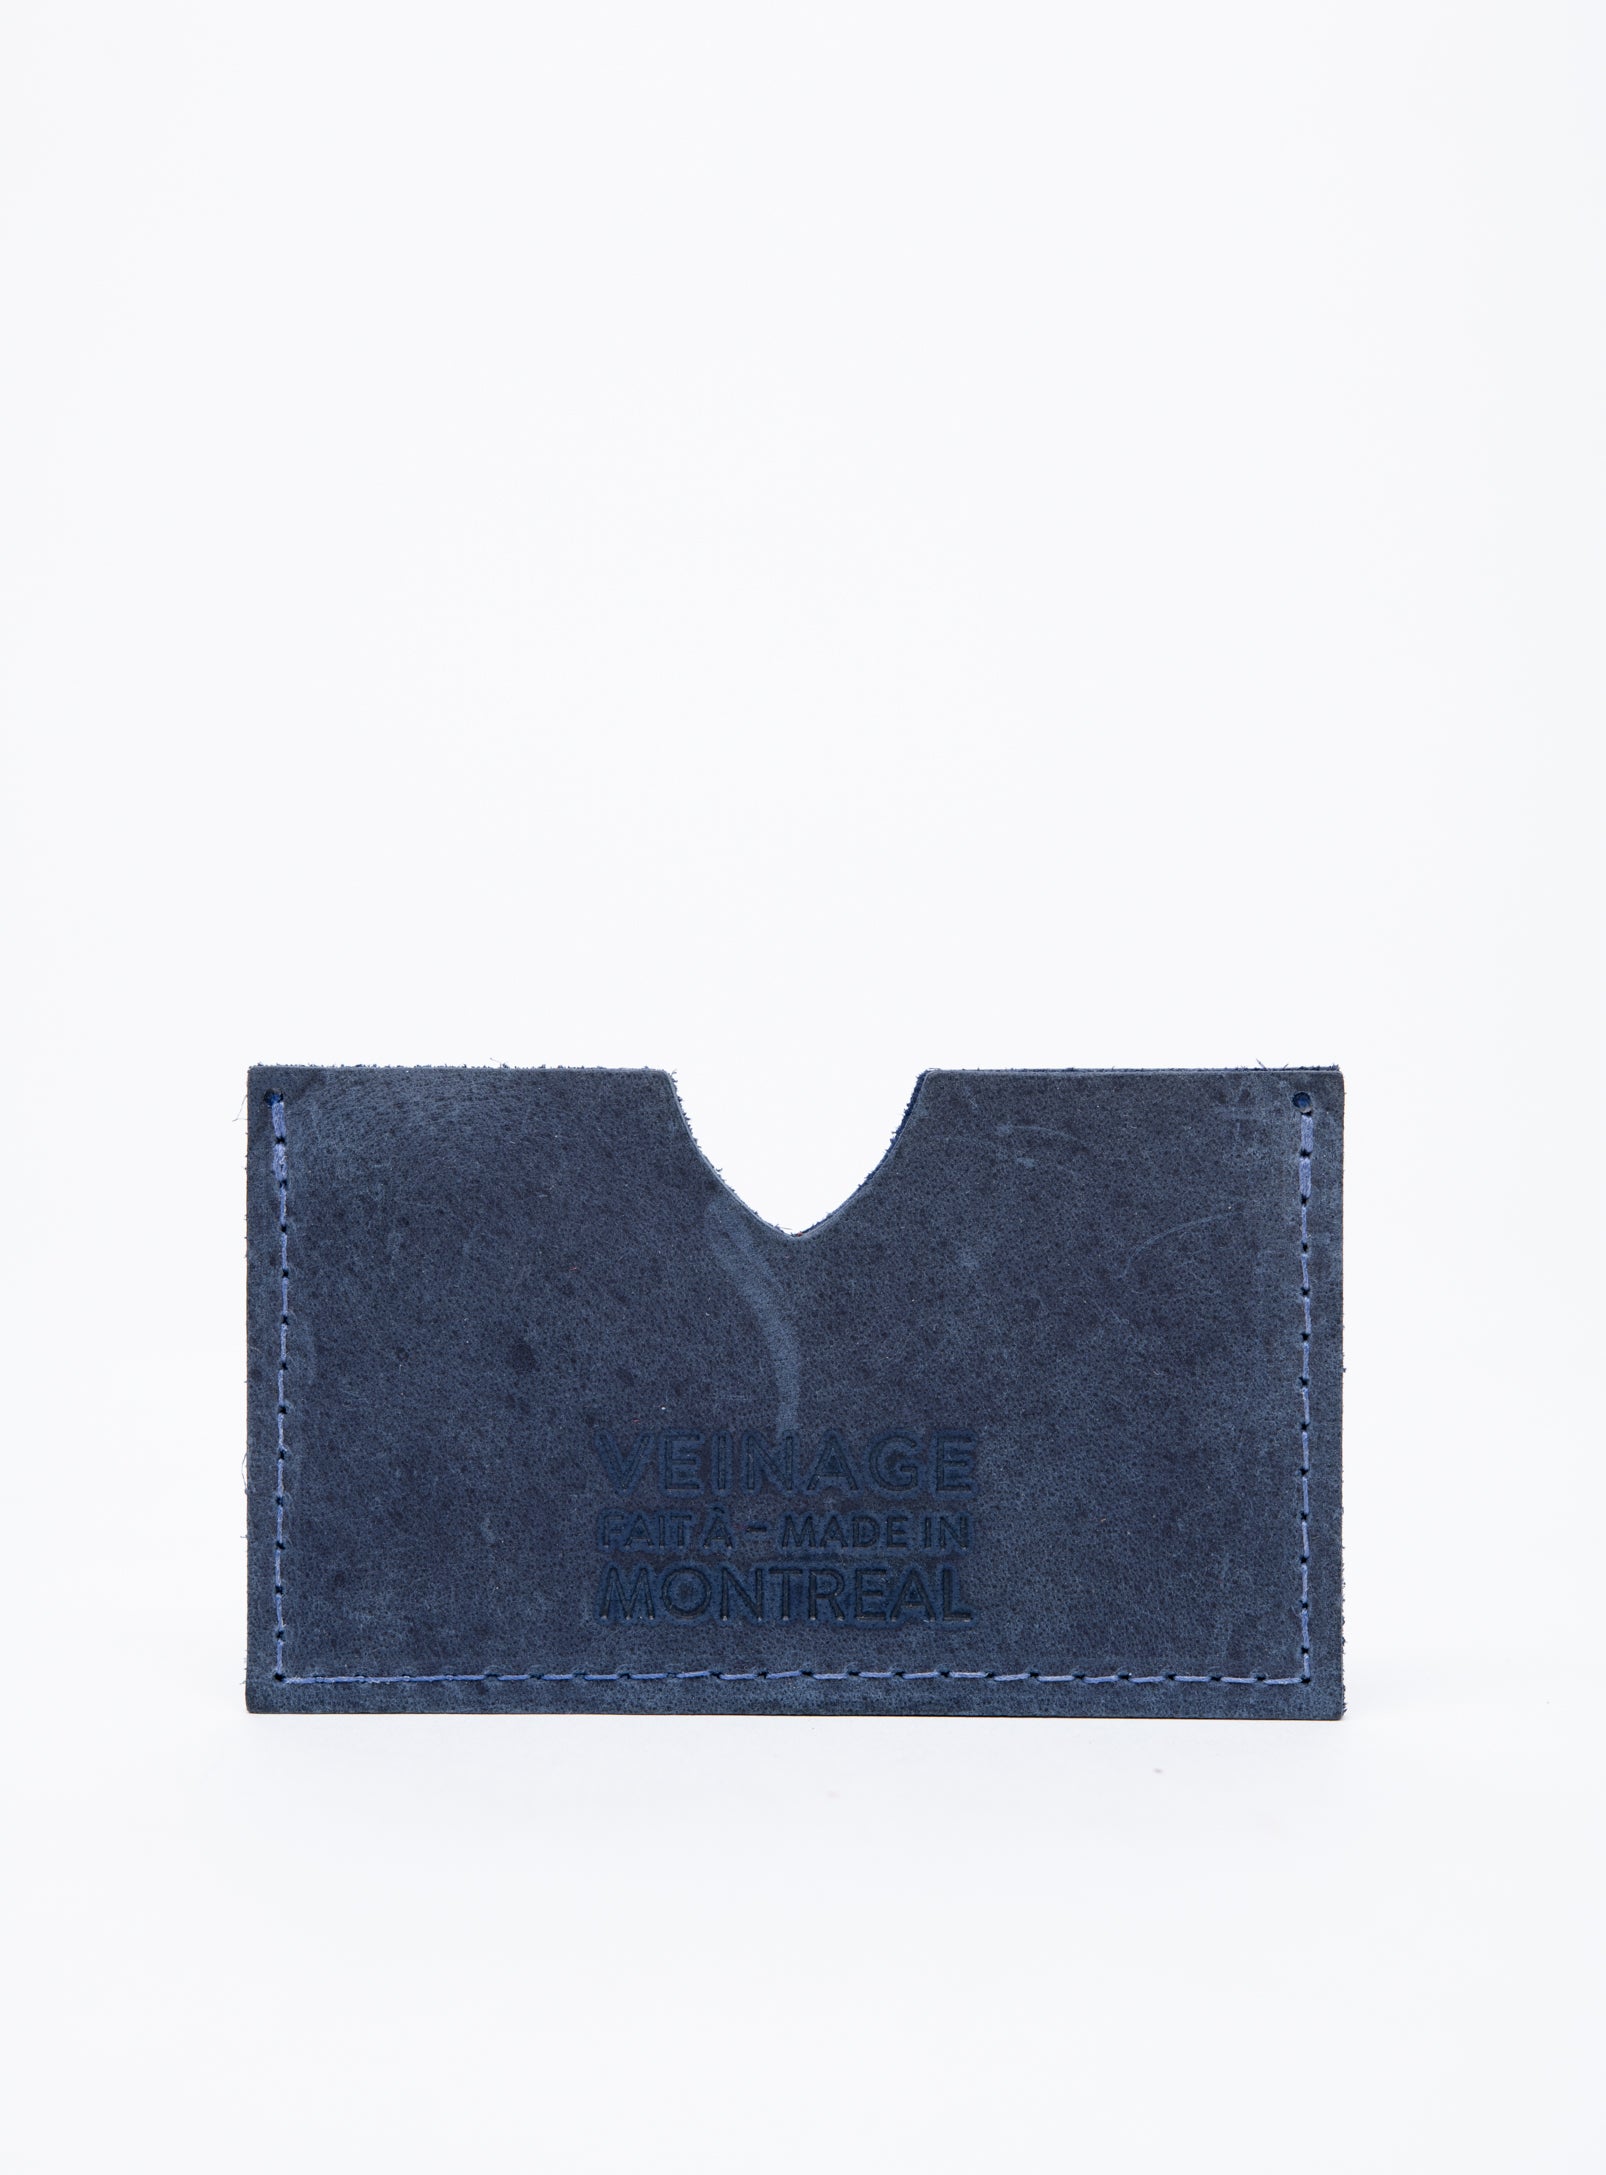 Leather minimalist cardholders CHABOT model